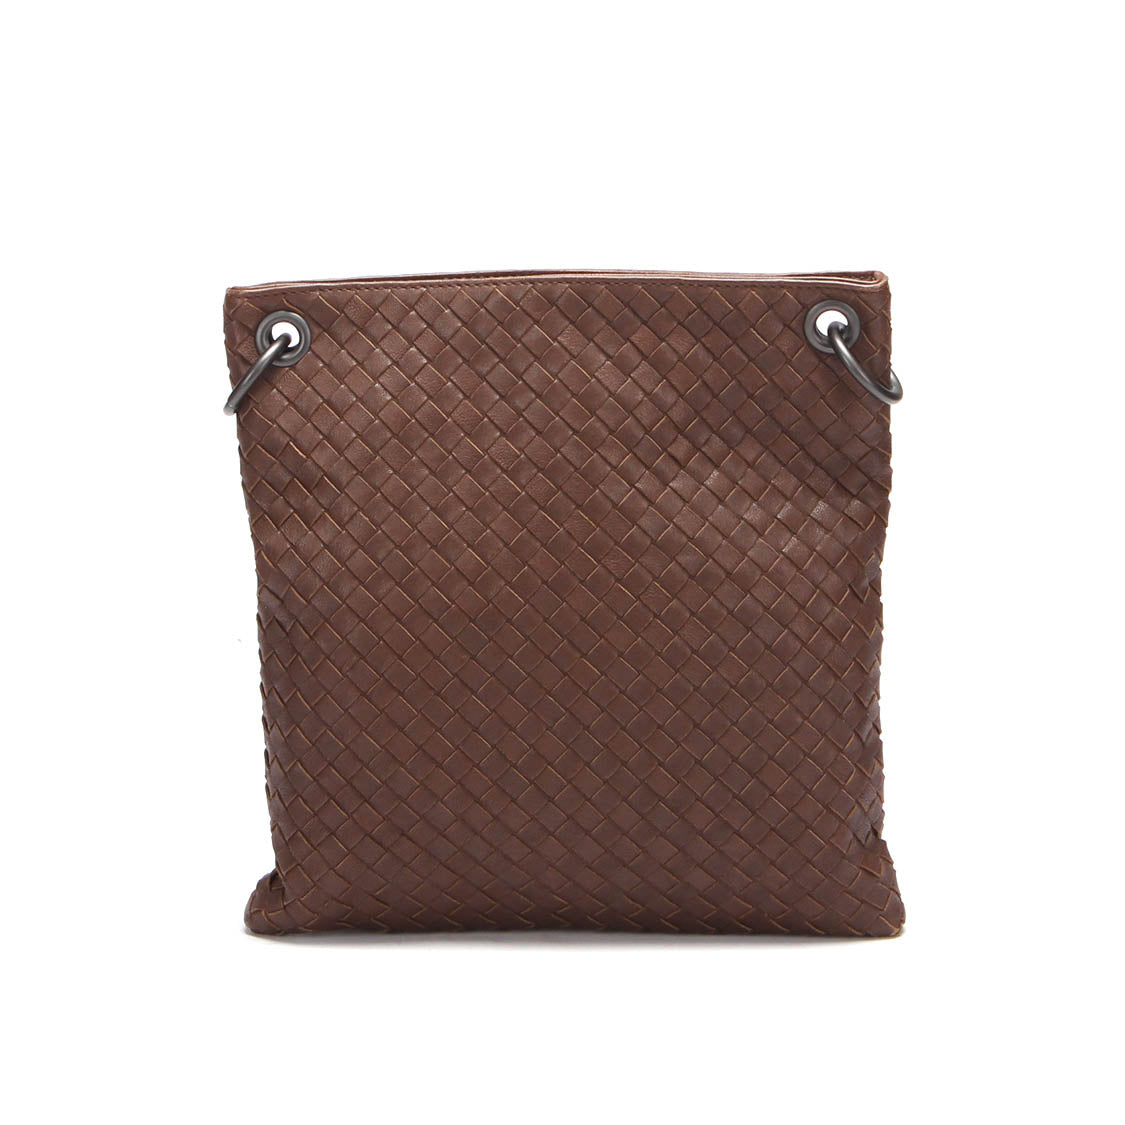 Intercciato Leather Crossbody Bag